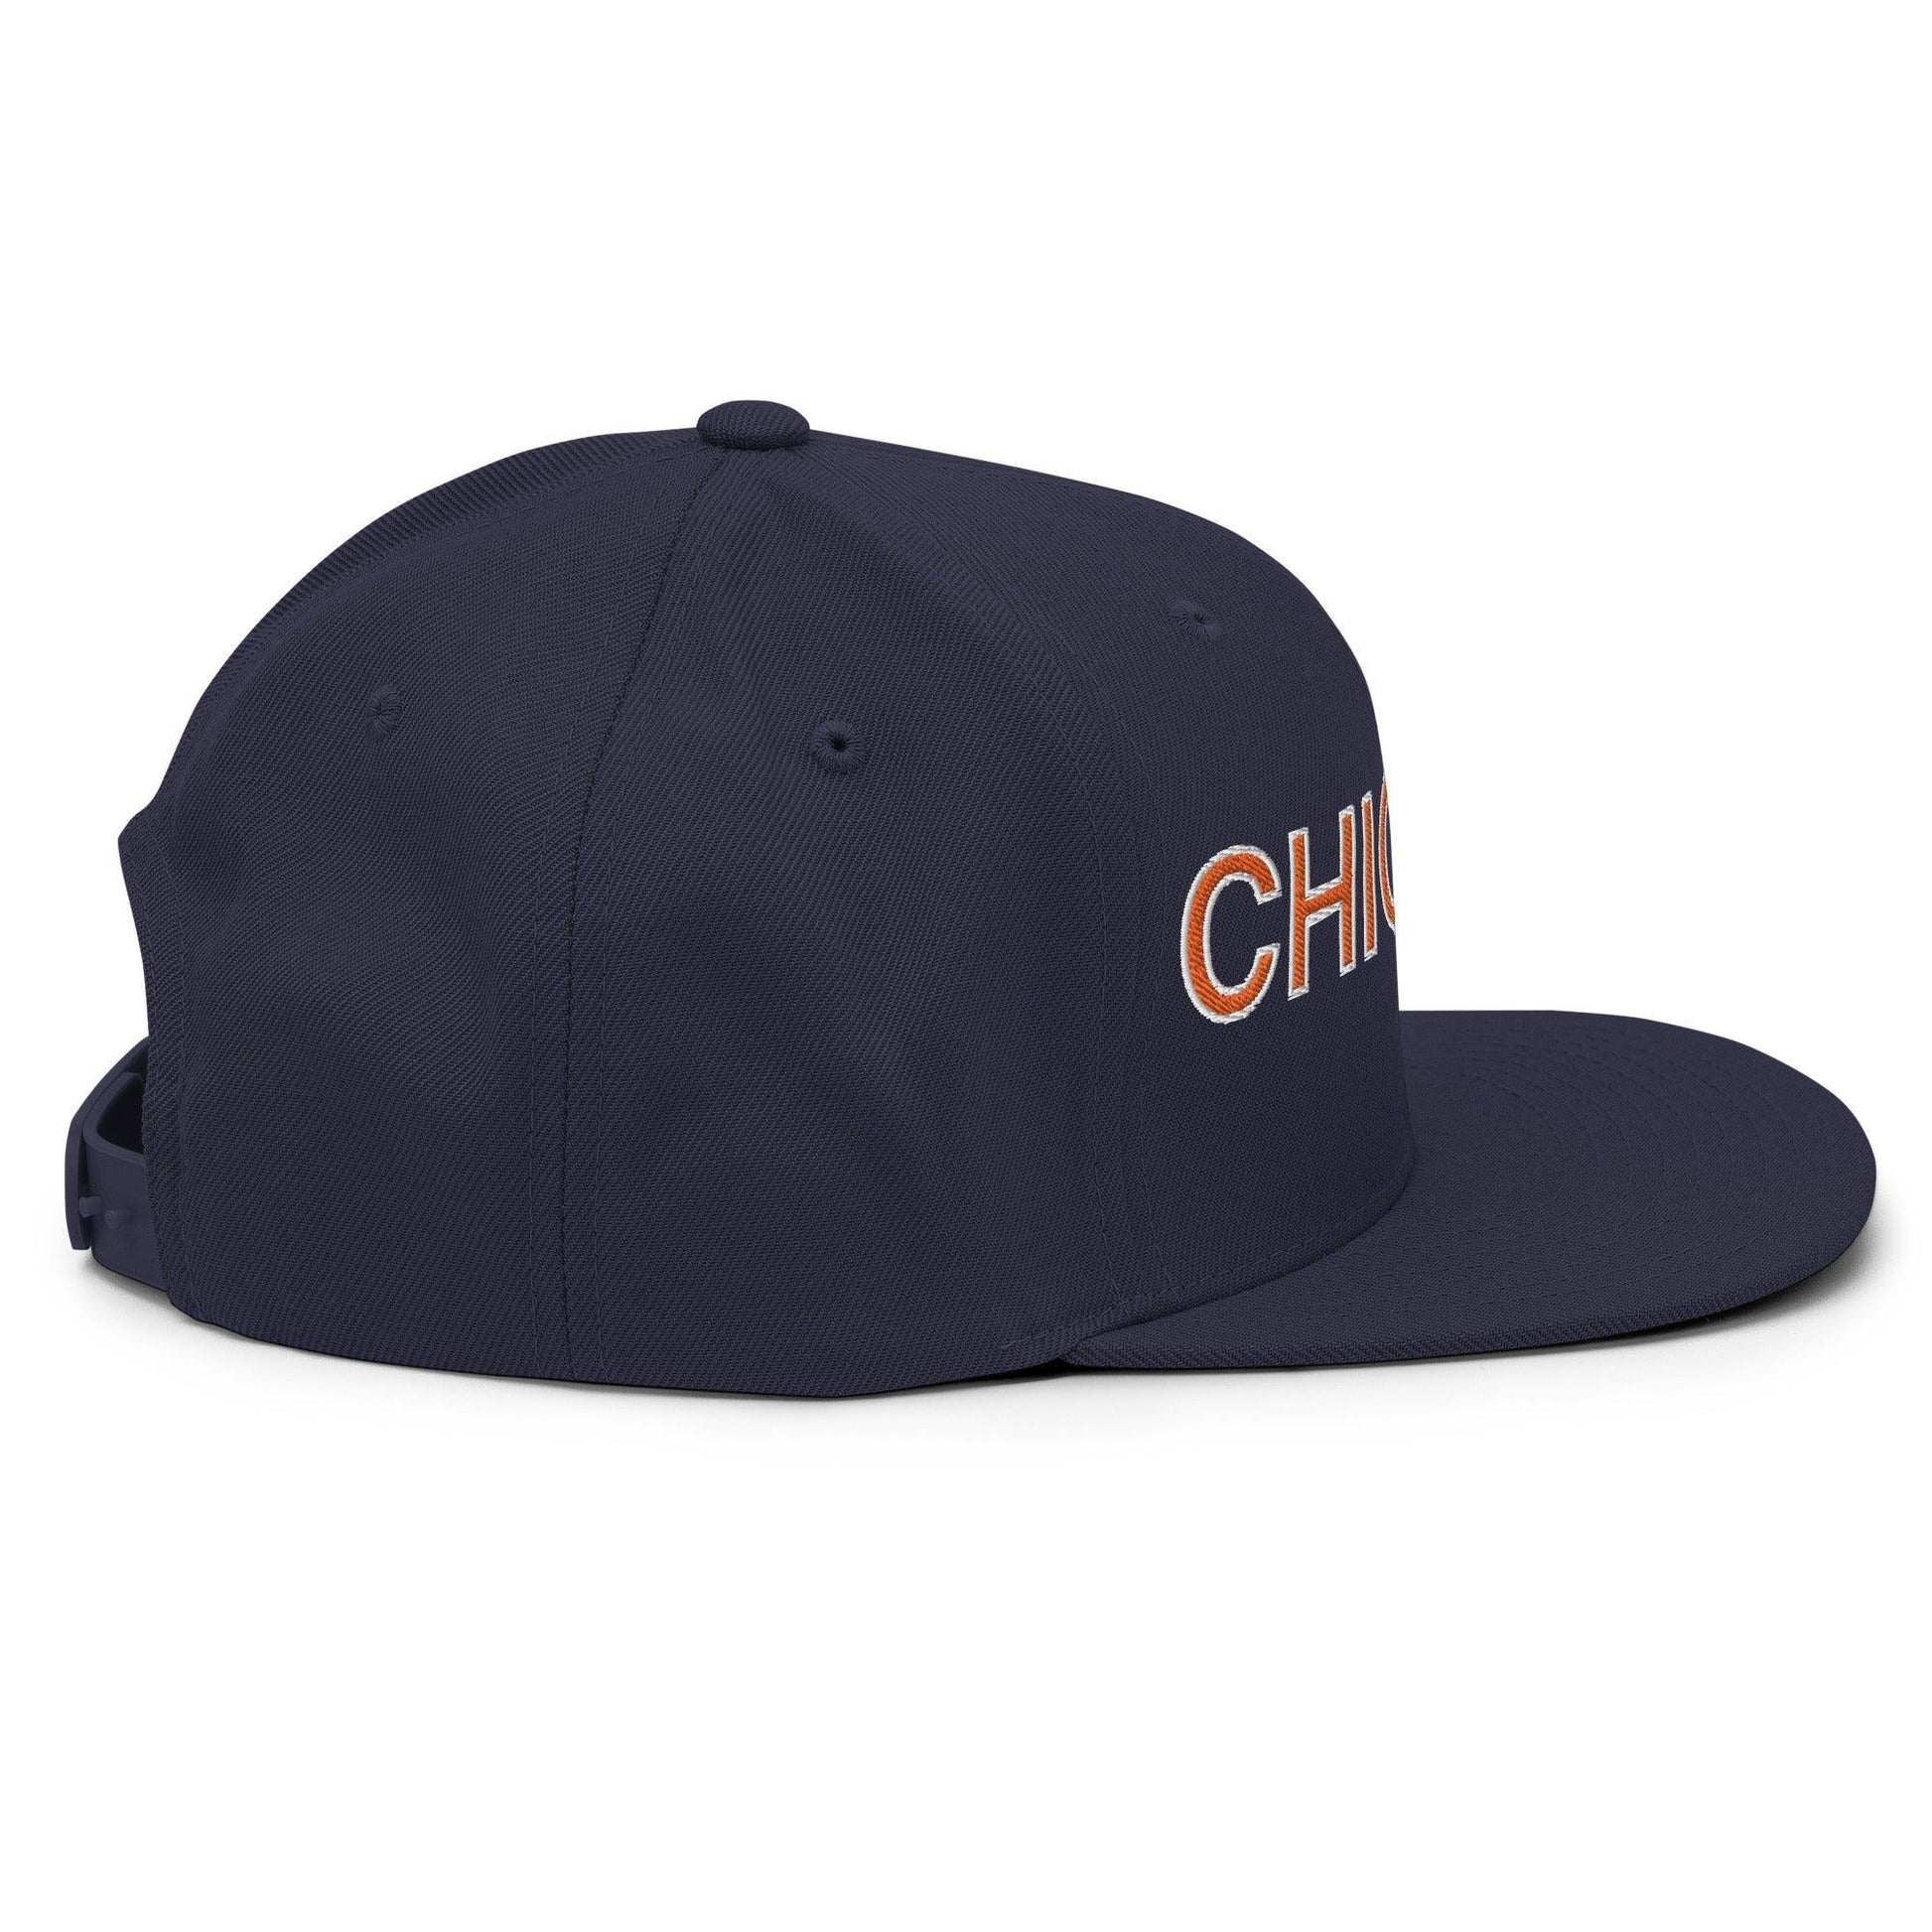 Chicago Football Snapback Hat 